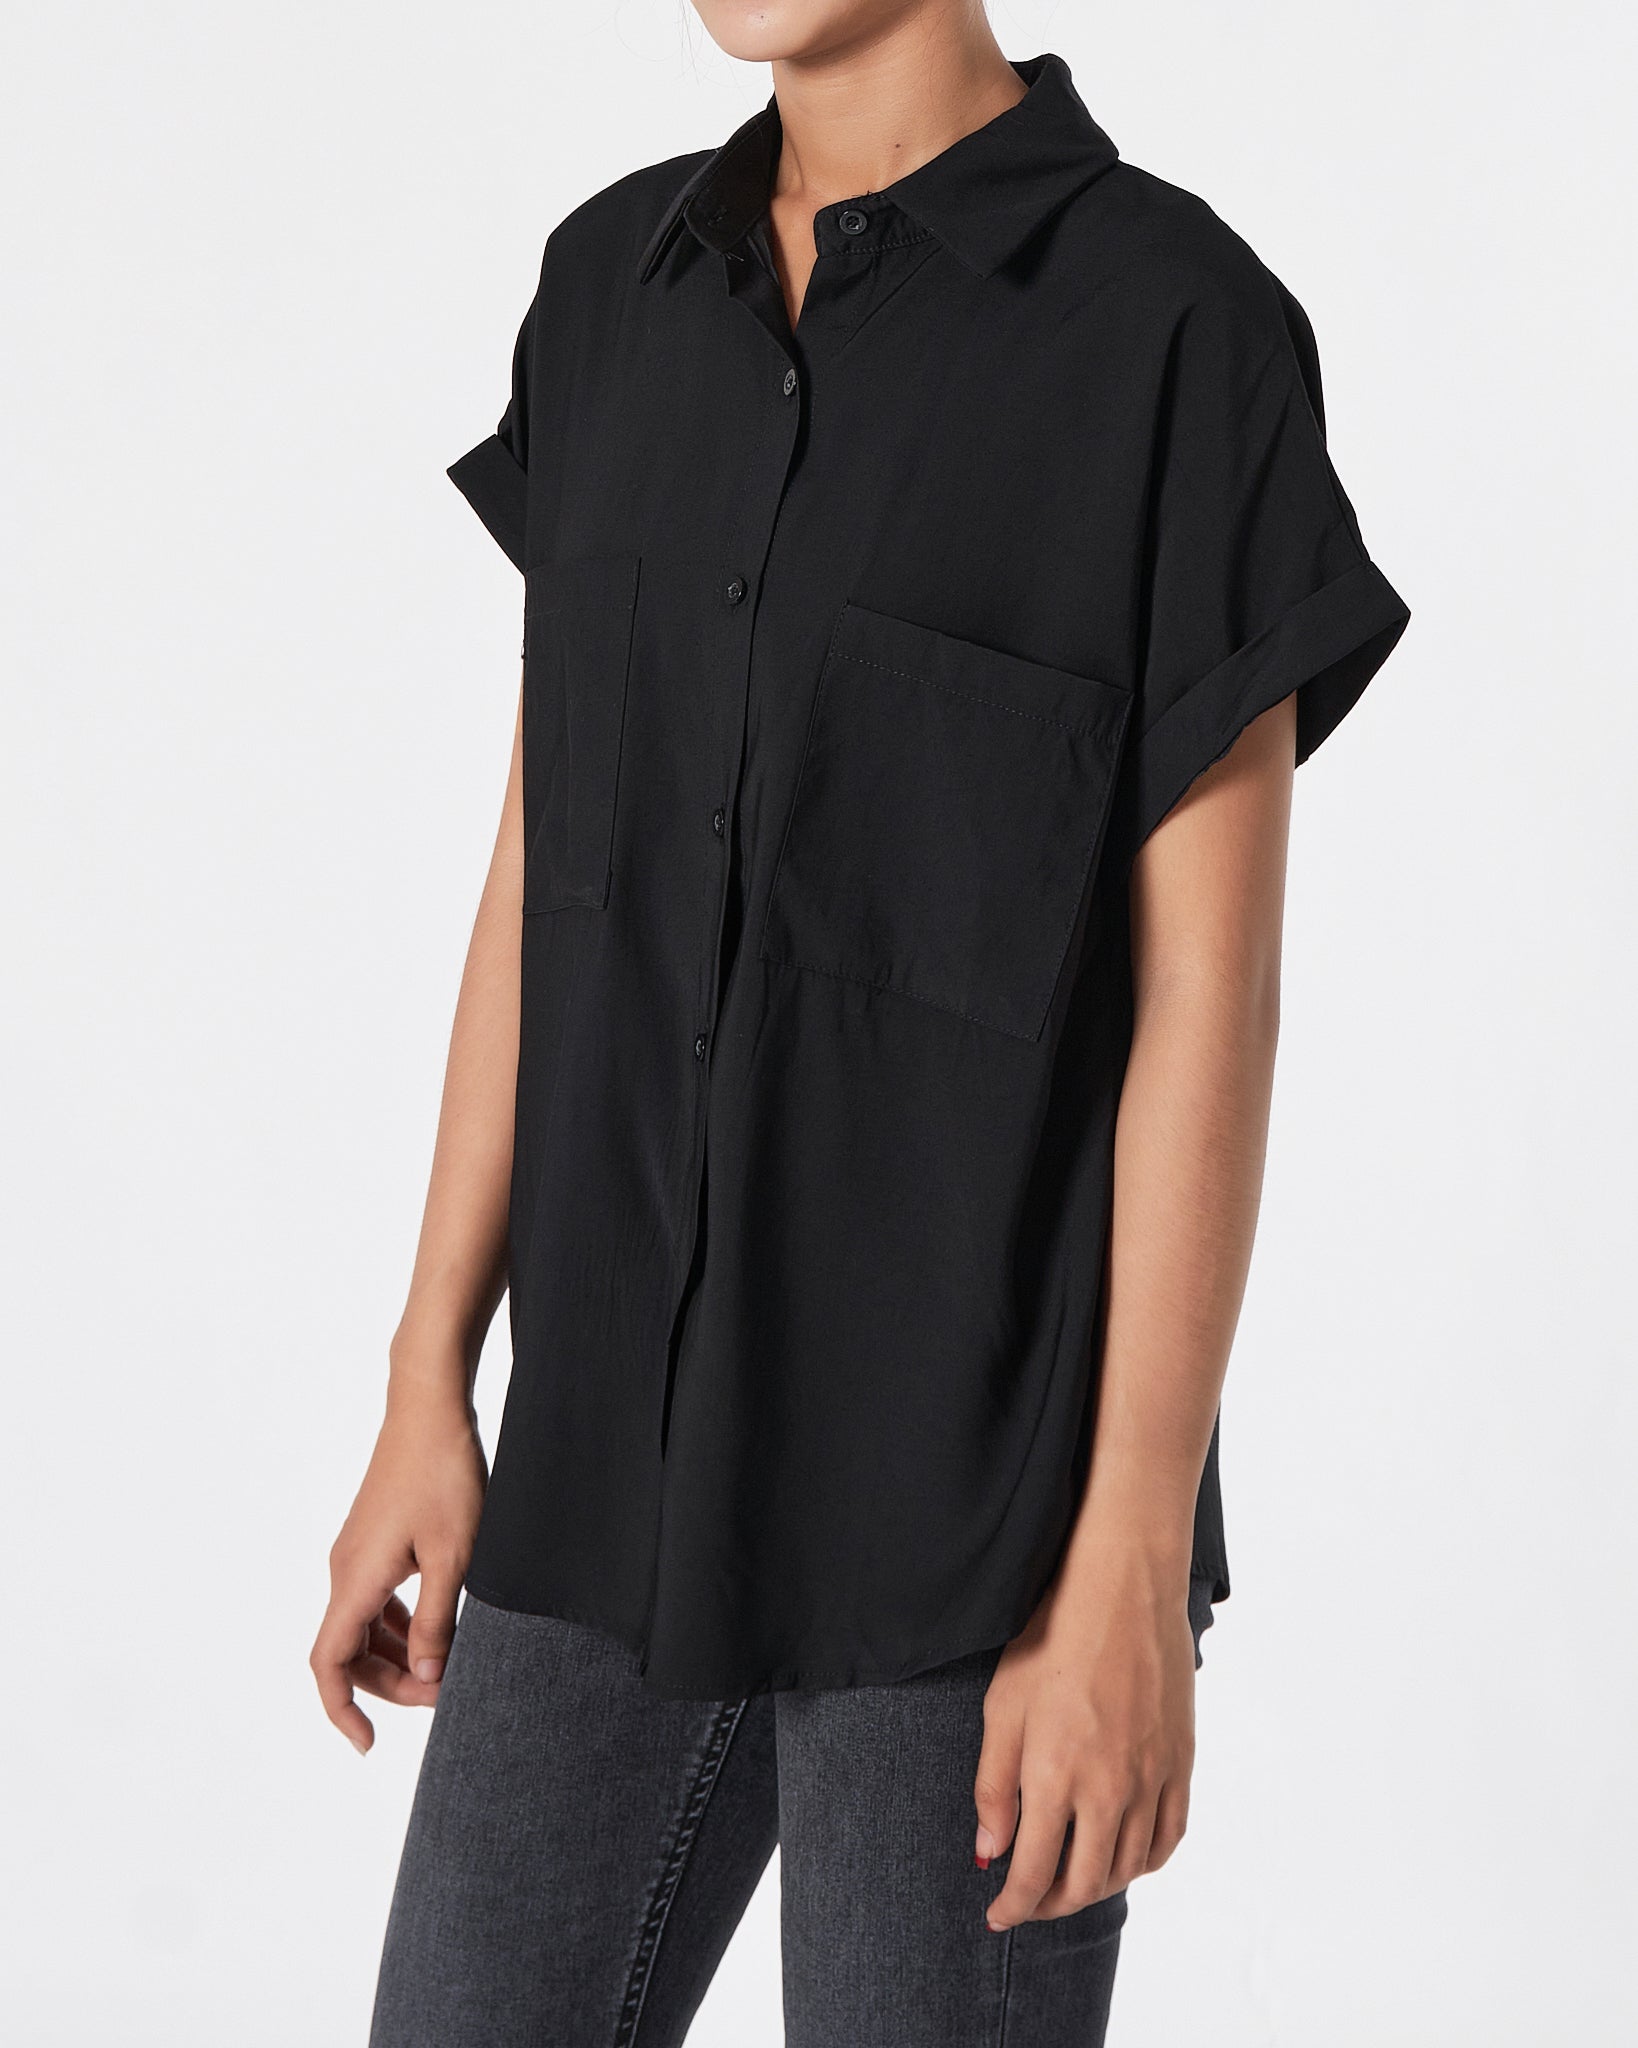 Lady Black Satin Shirts Short Sleeve 17.90